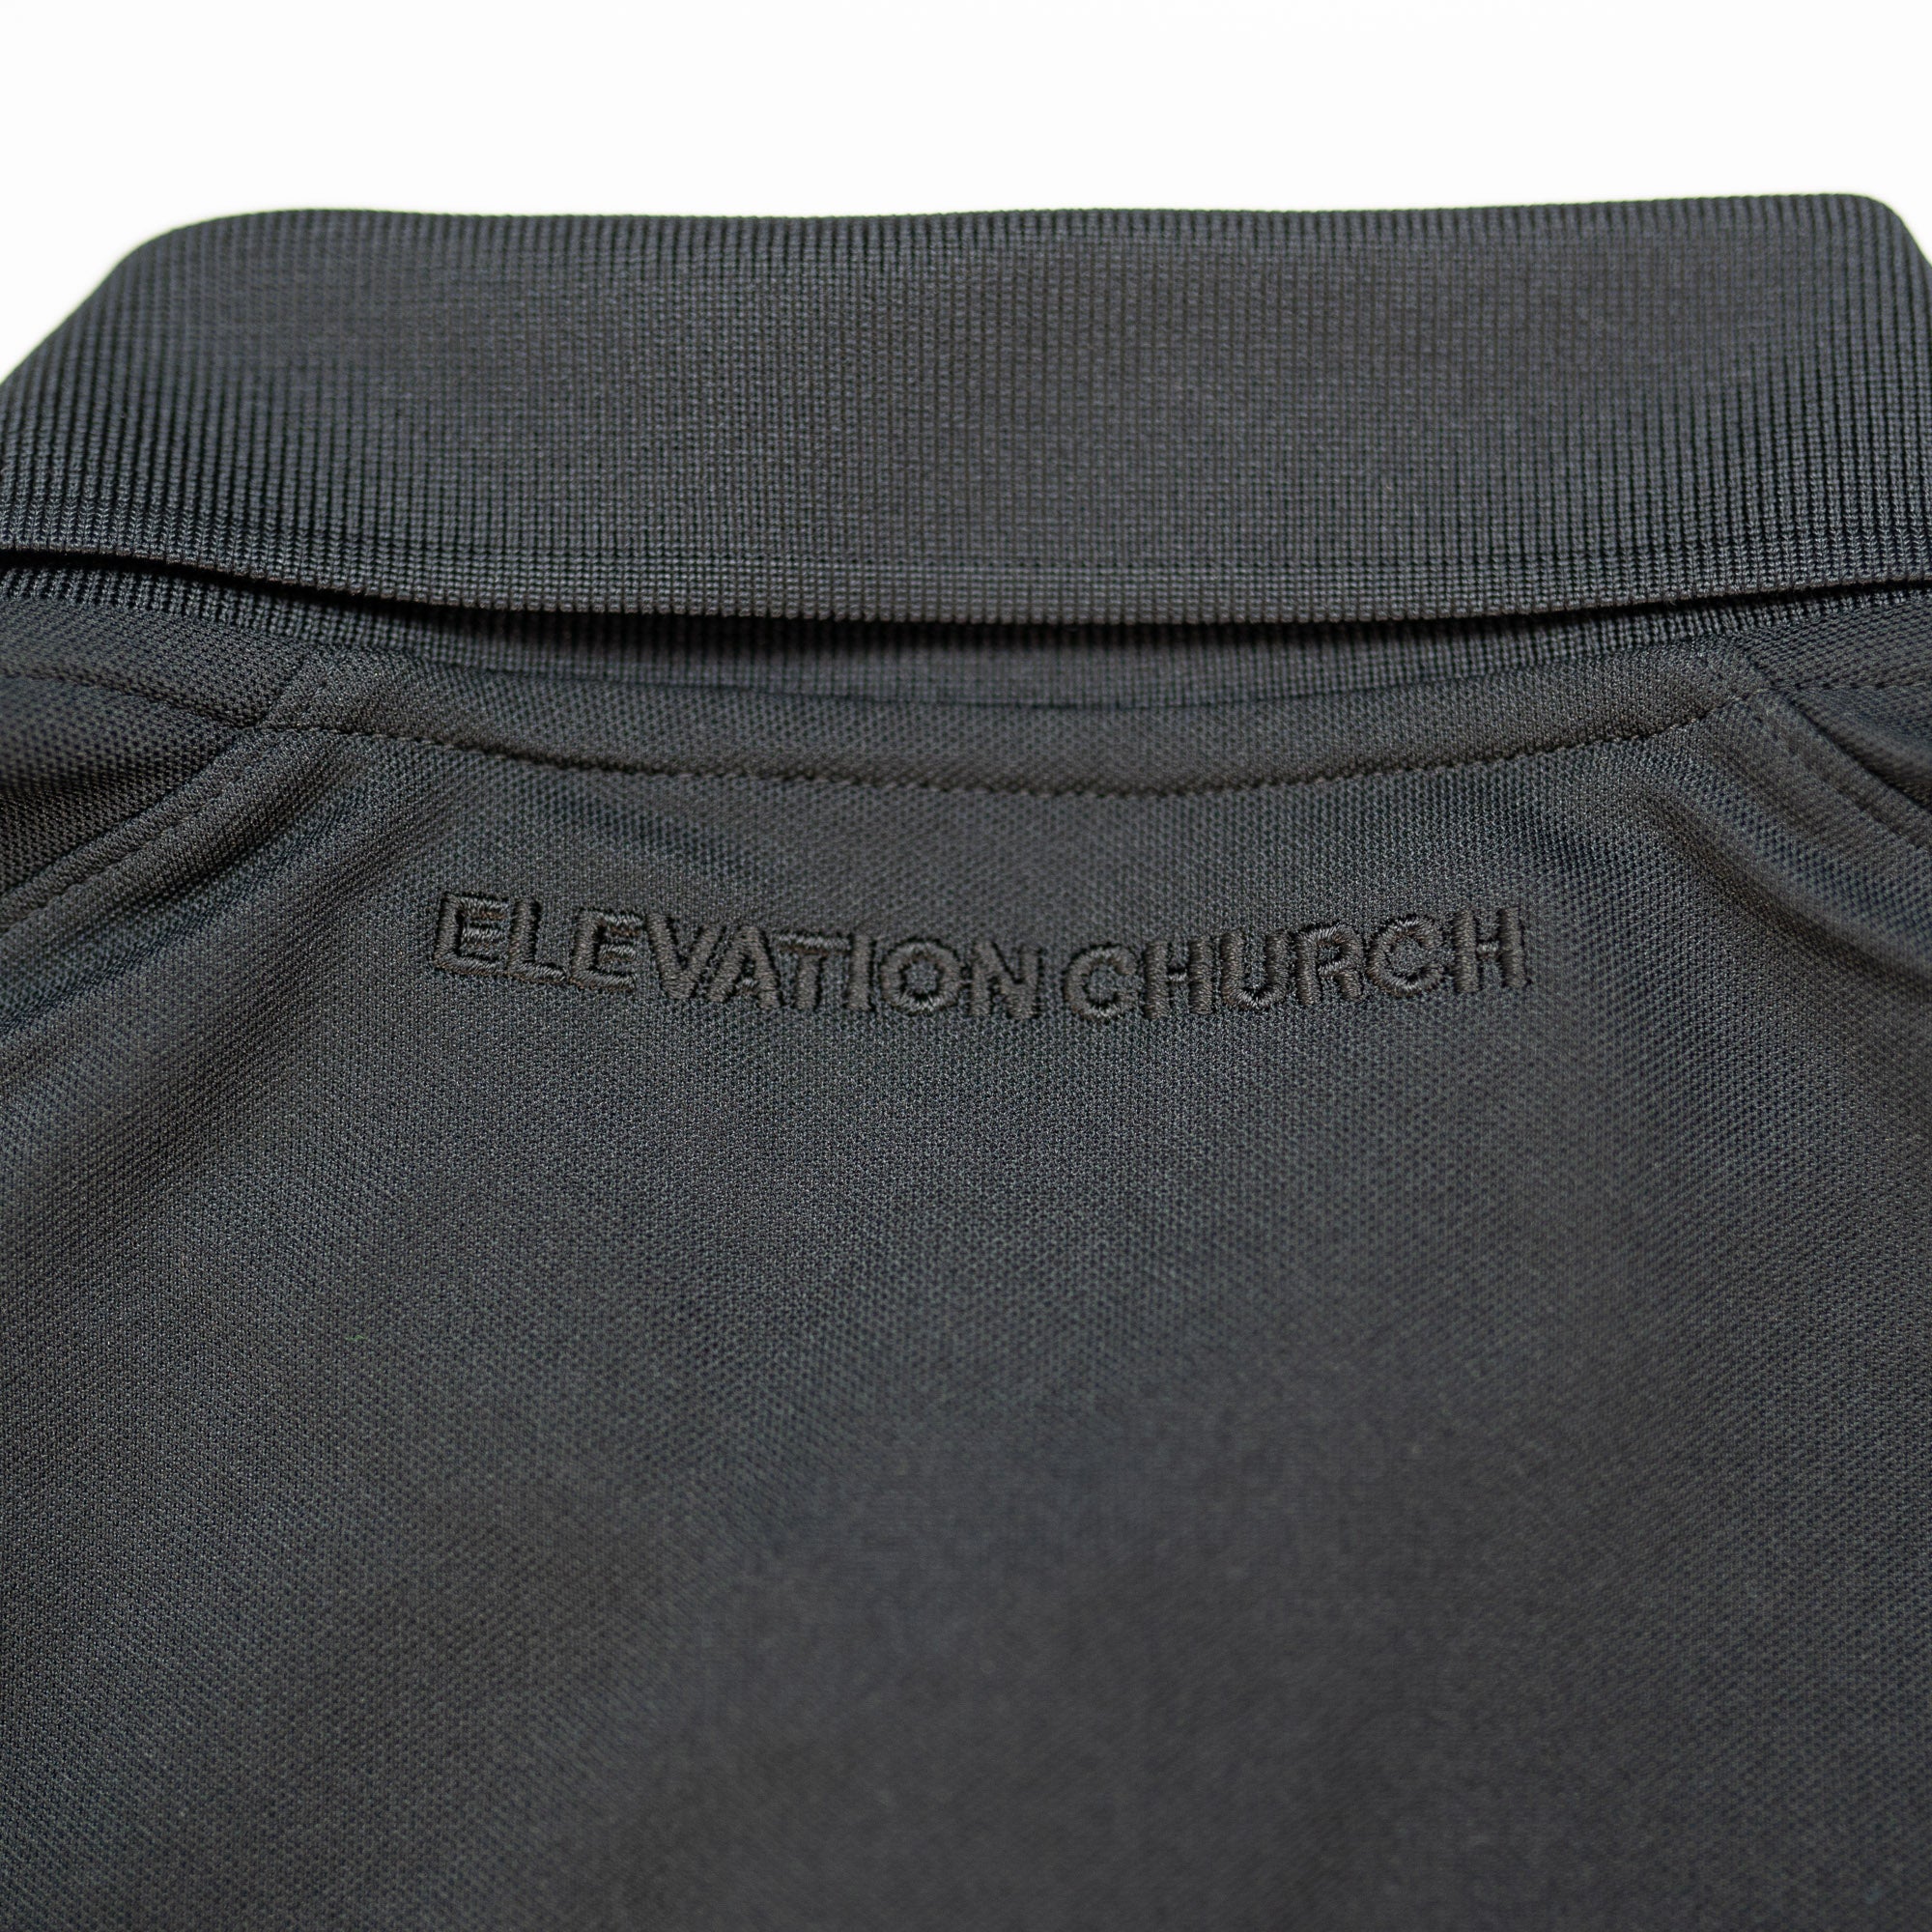 Elevation Church Nike Polo